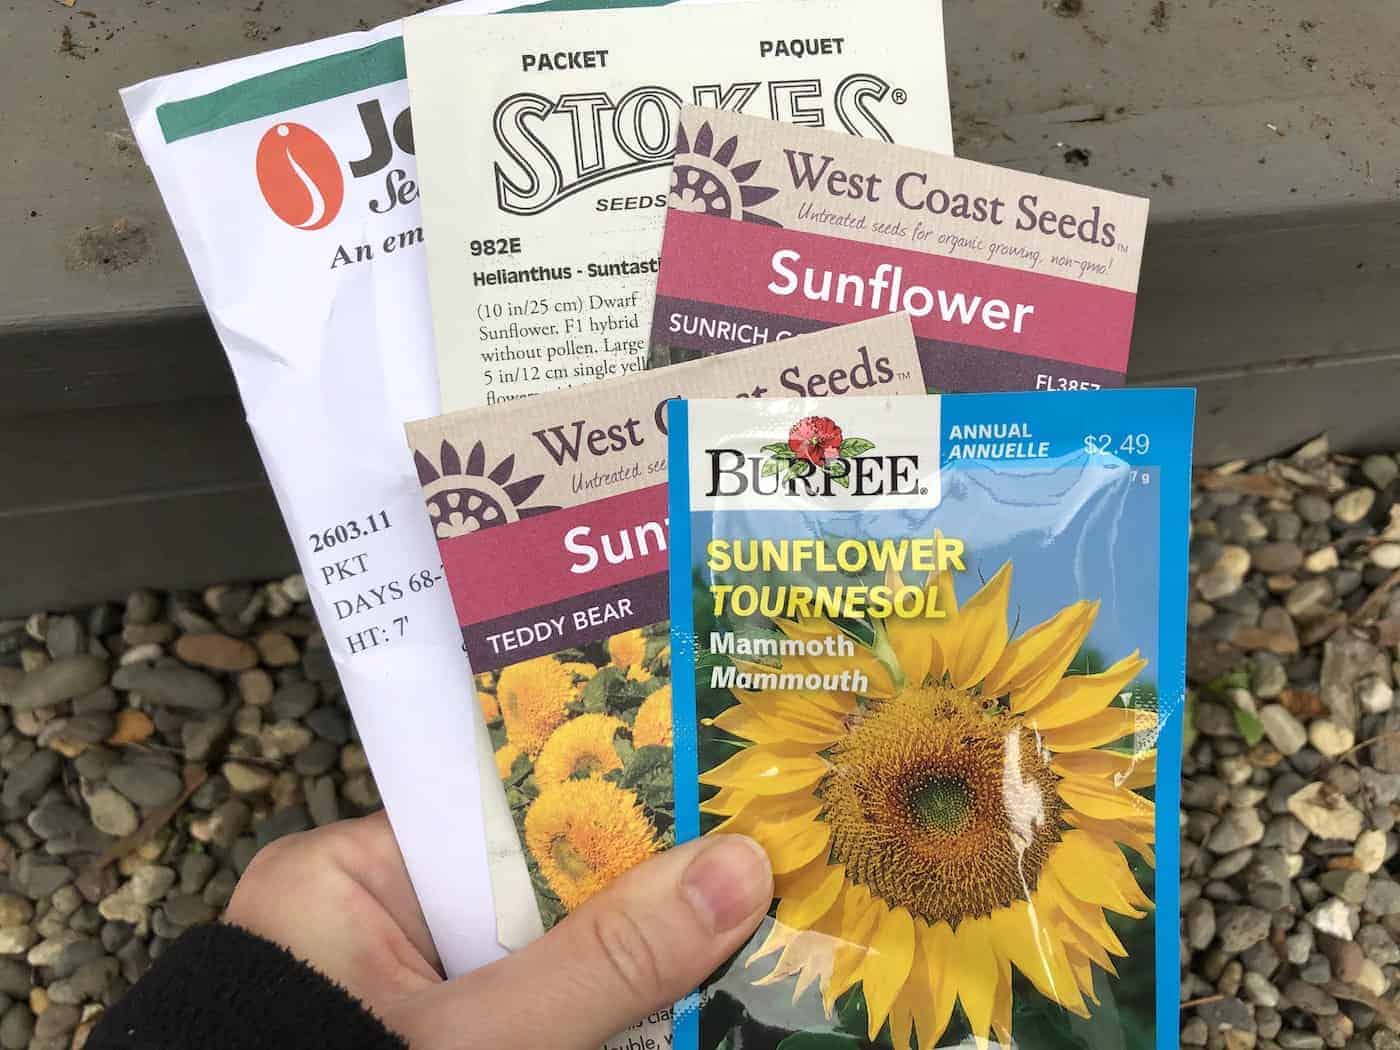 Packets of sunflower seeds